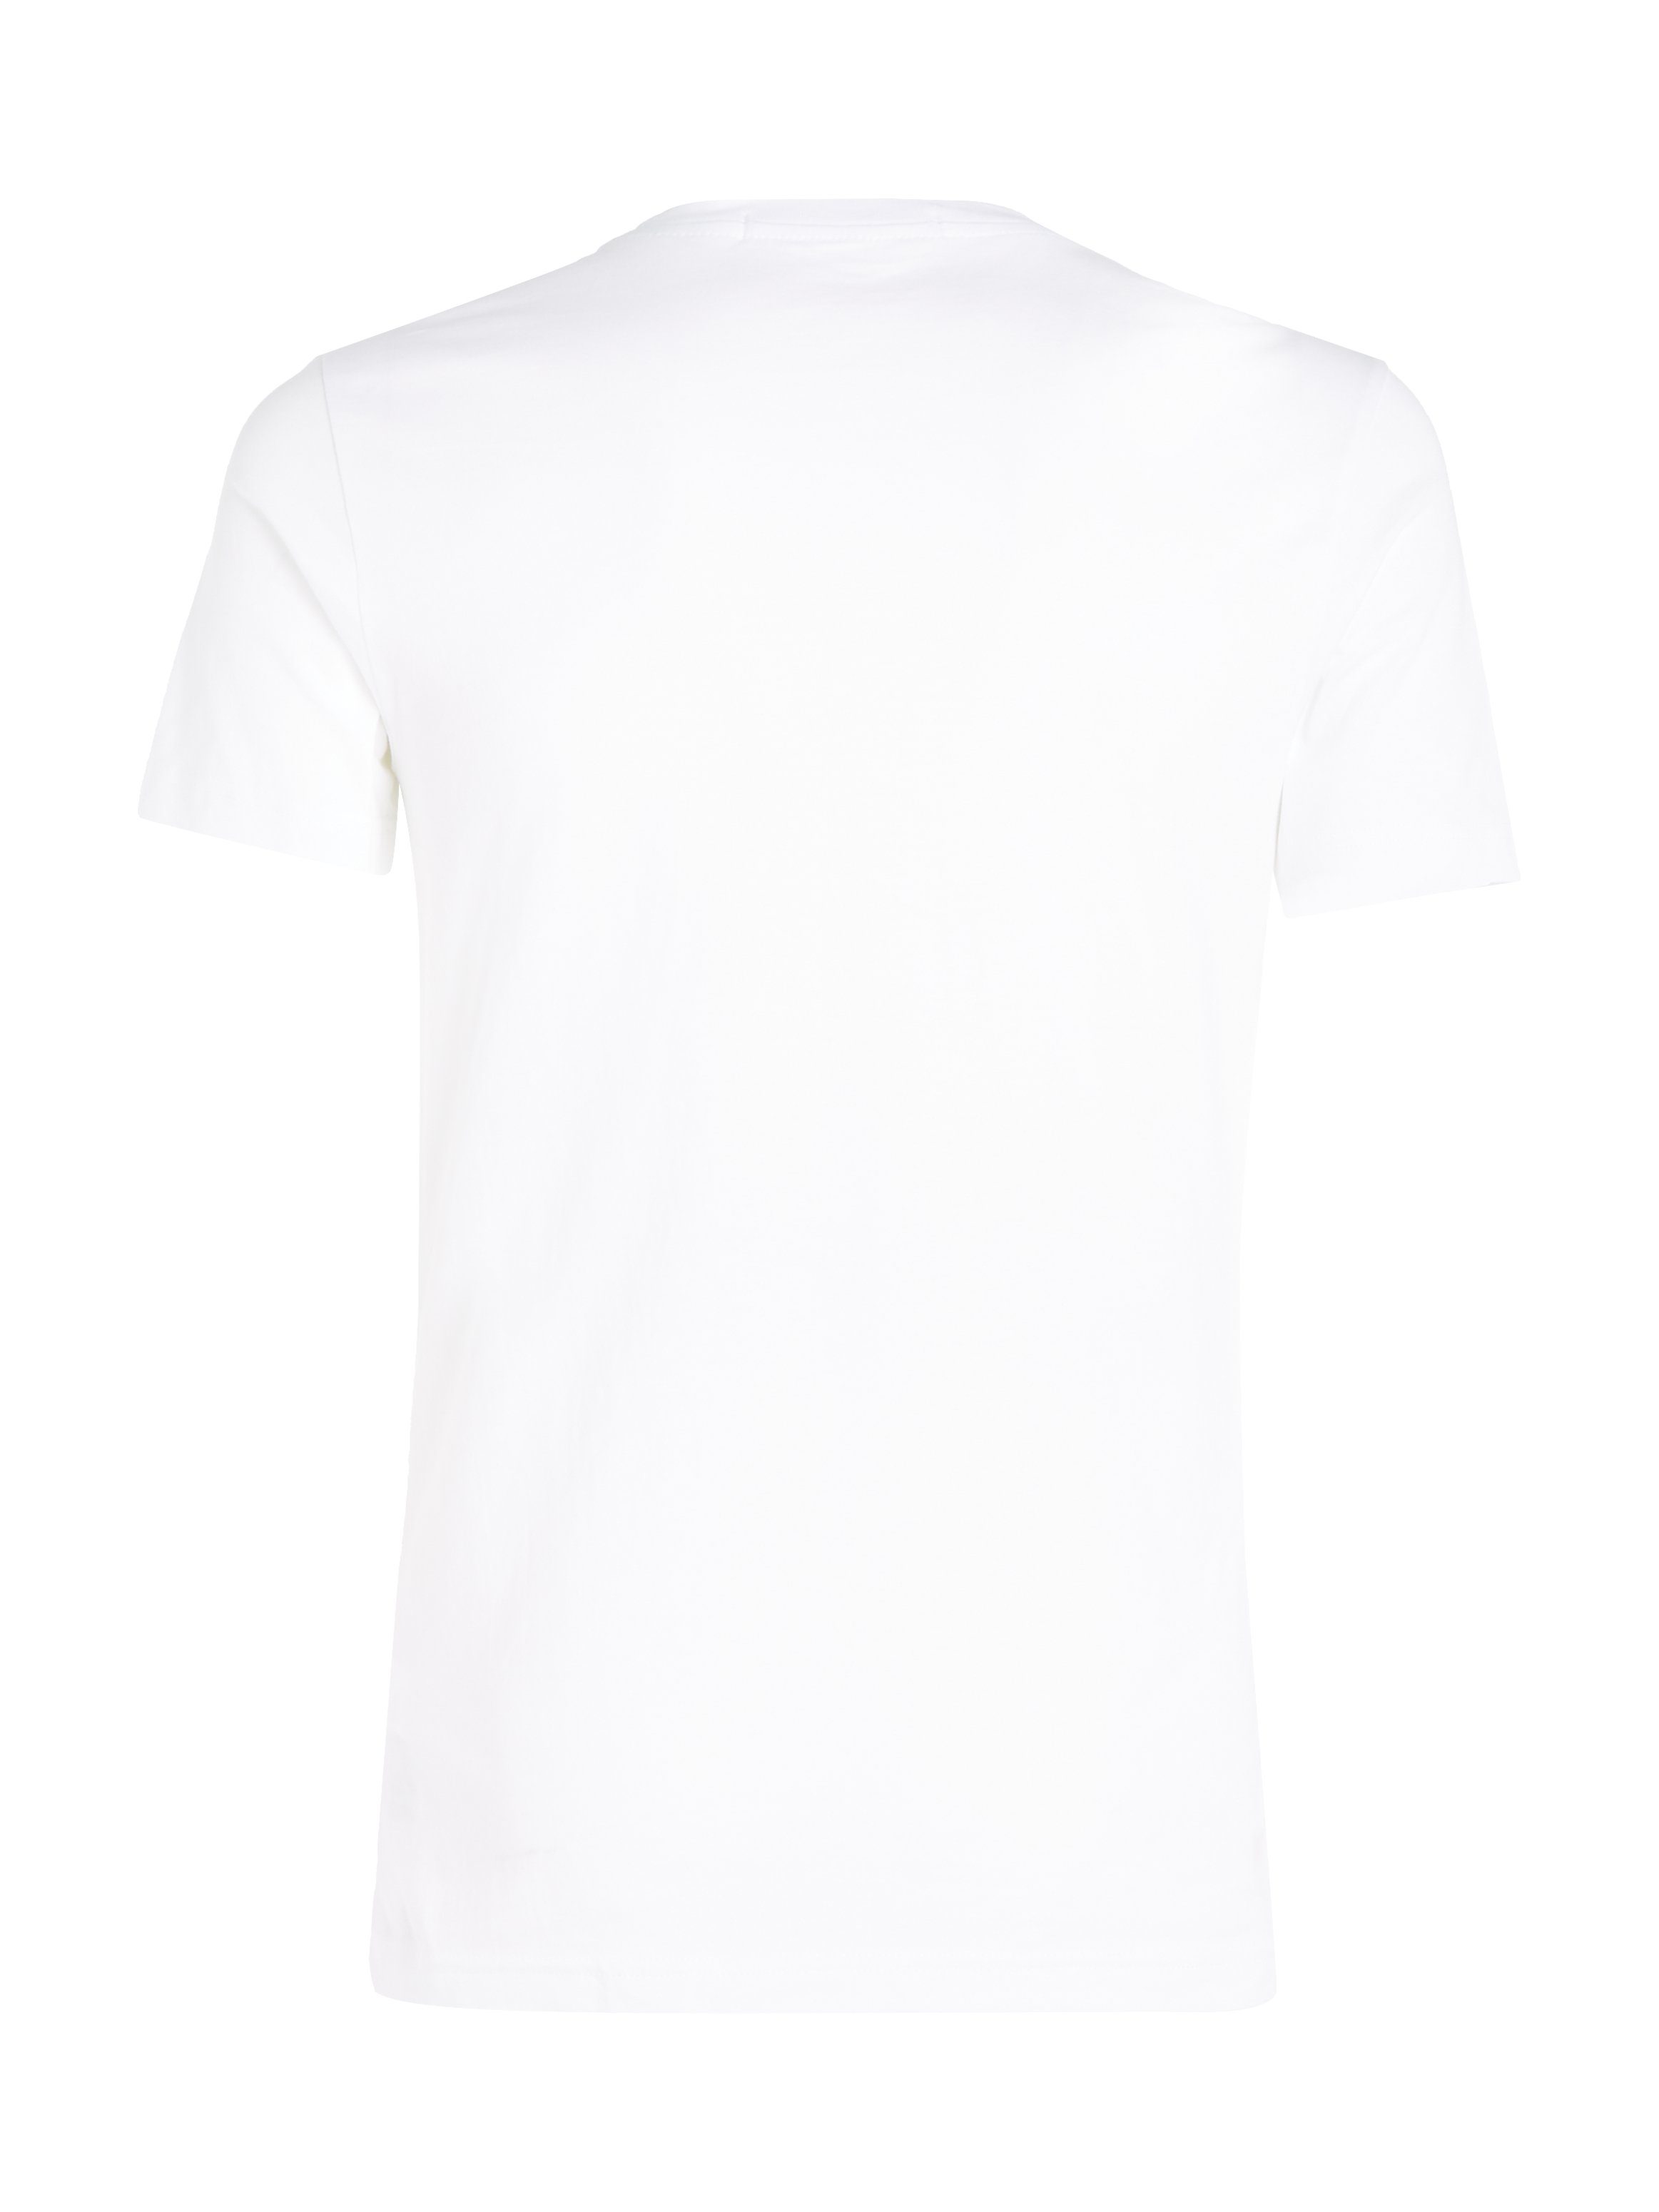 Calvin Klein Jeans T-Shirt CORE White INSTITUTIONAL LOGO SLIM TEE Bright